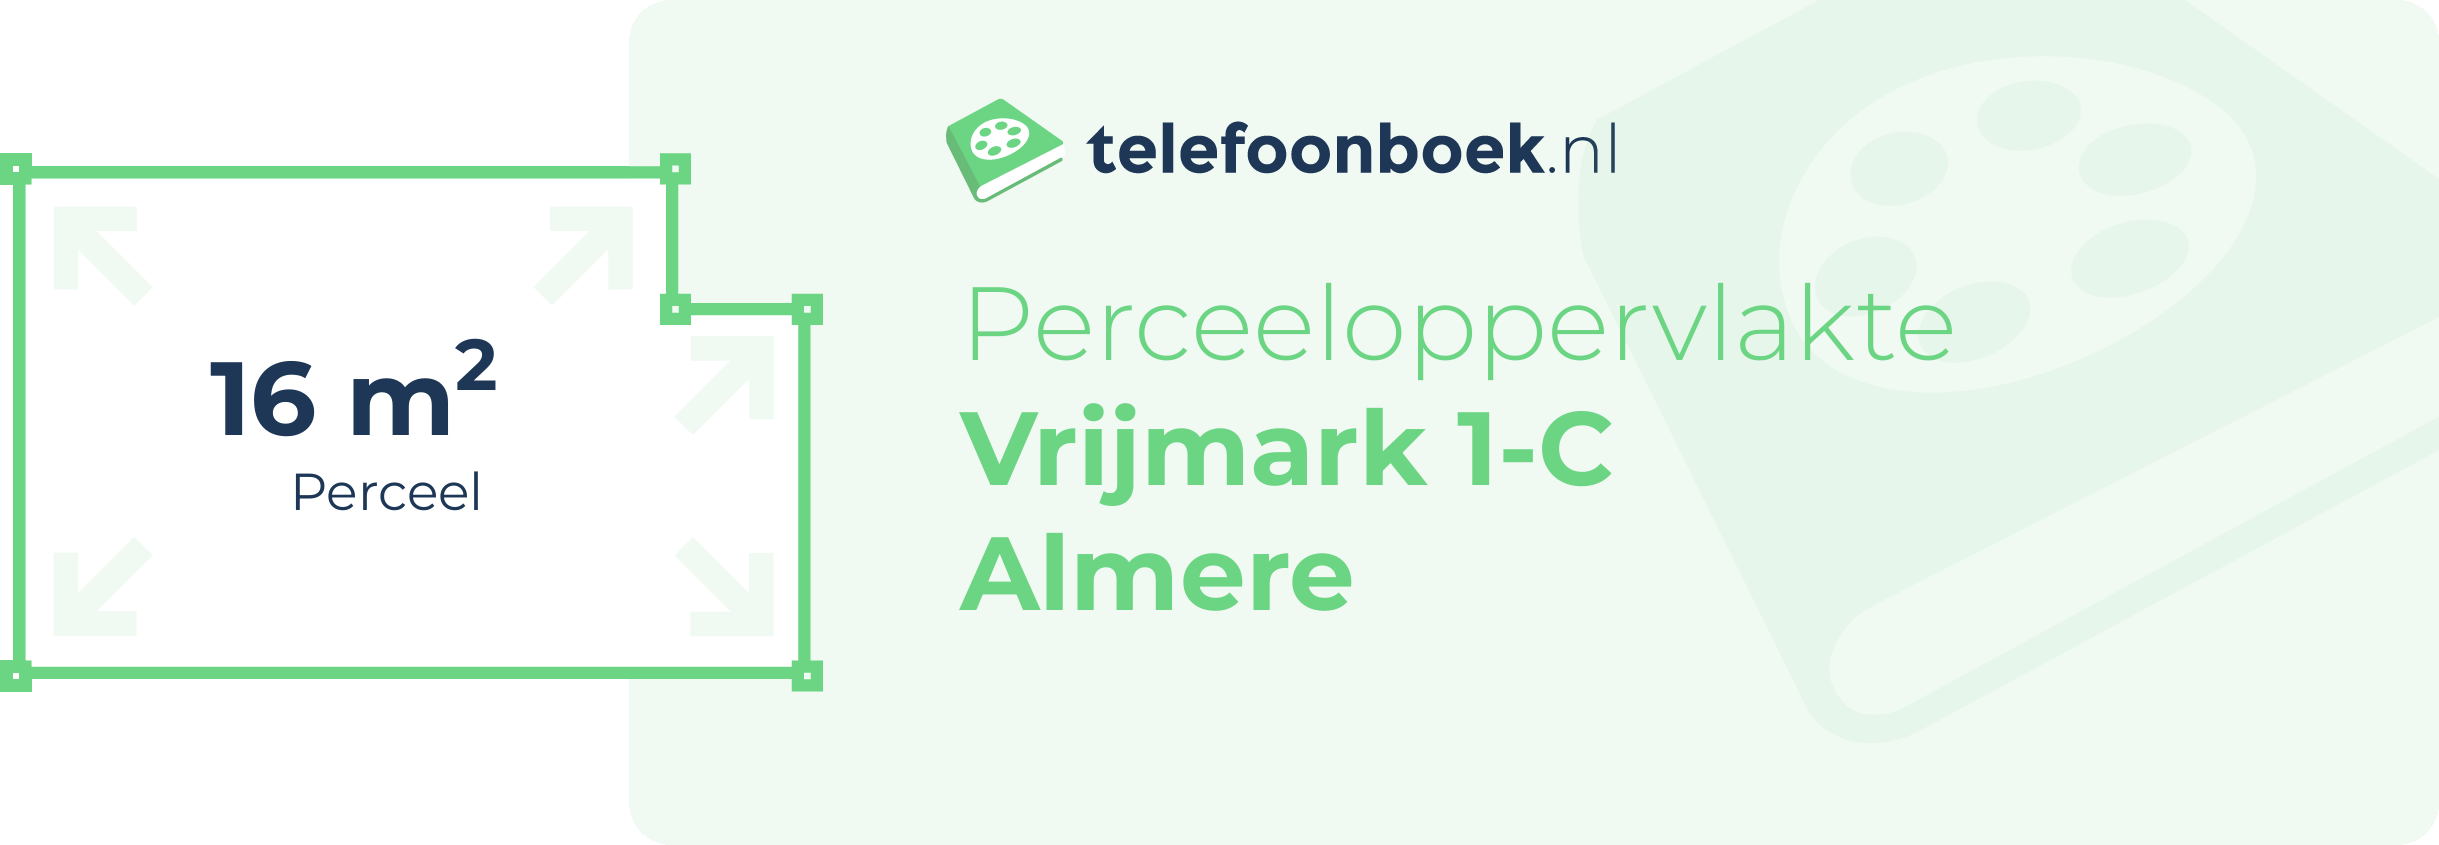 Perceeloppervlakte Vrijmark 1-C Almere